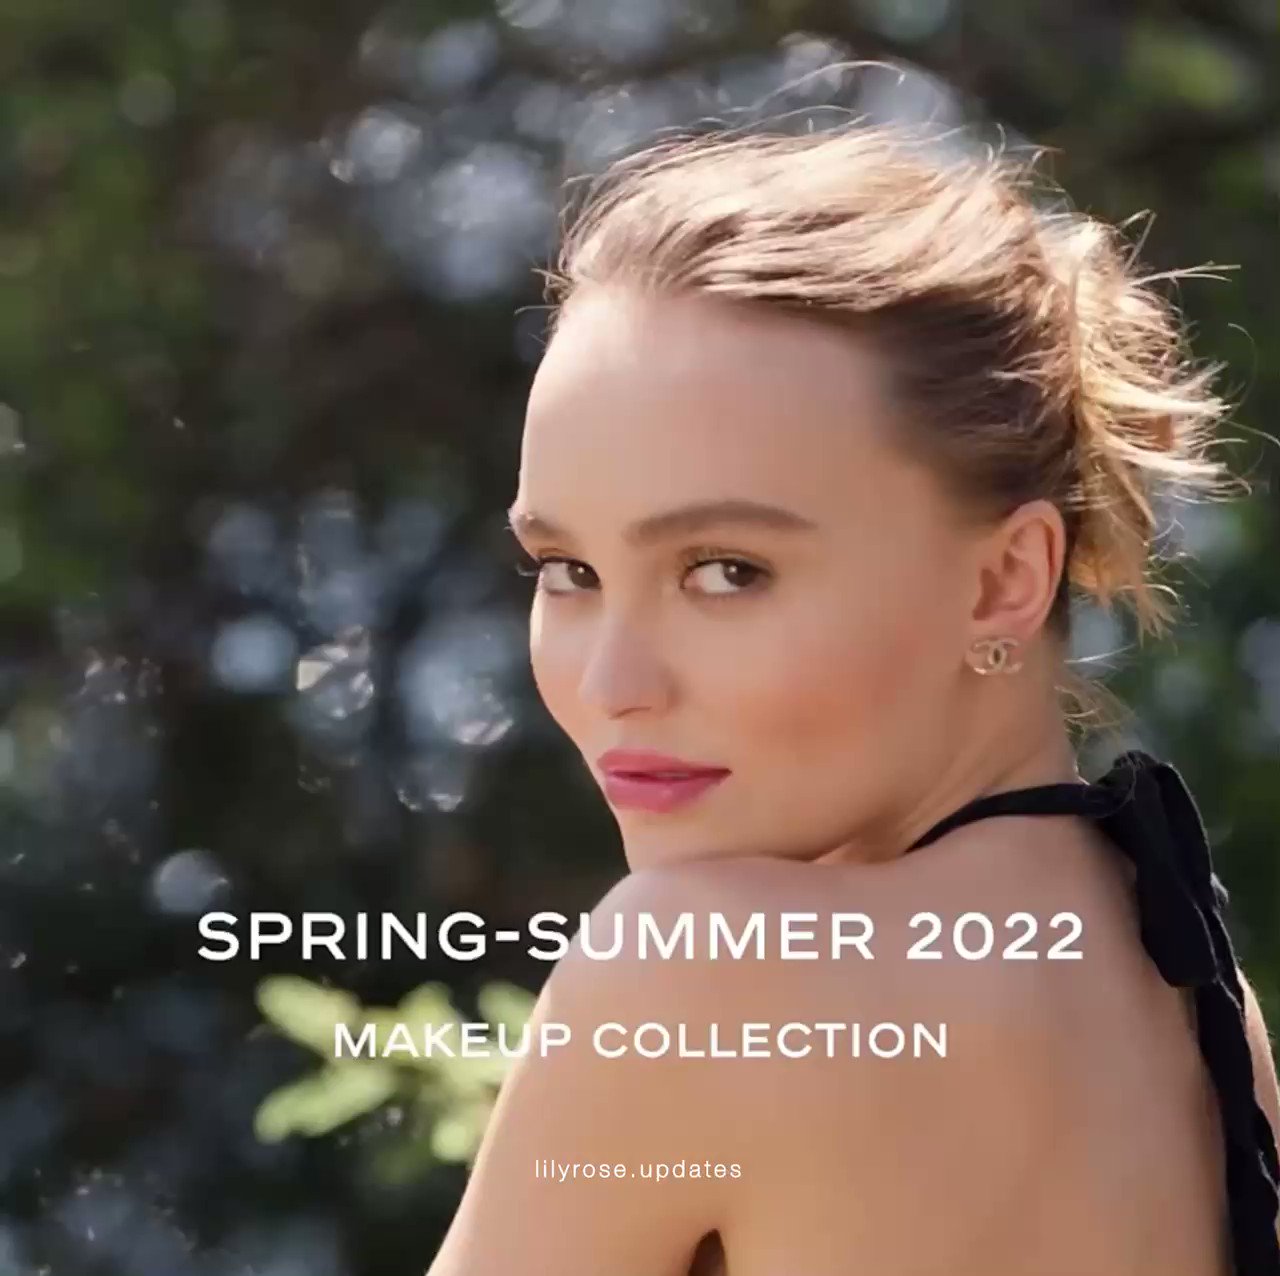 Chanel La Pausa de Chanel Collection for Spring 2022